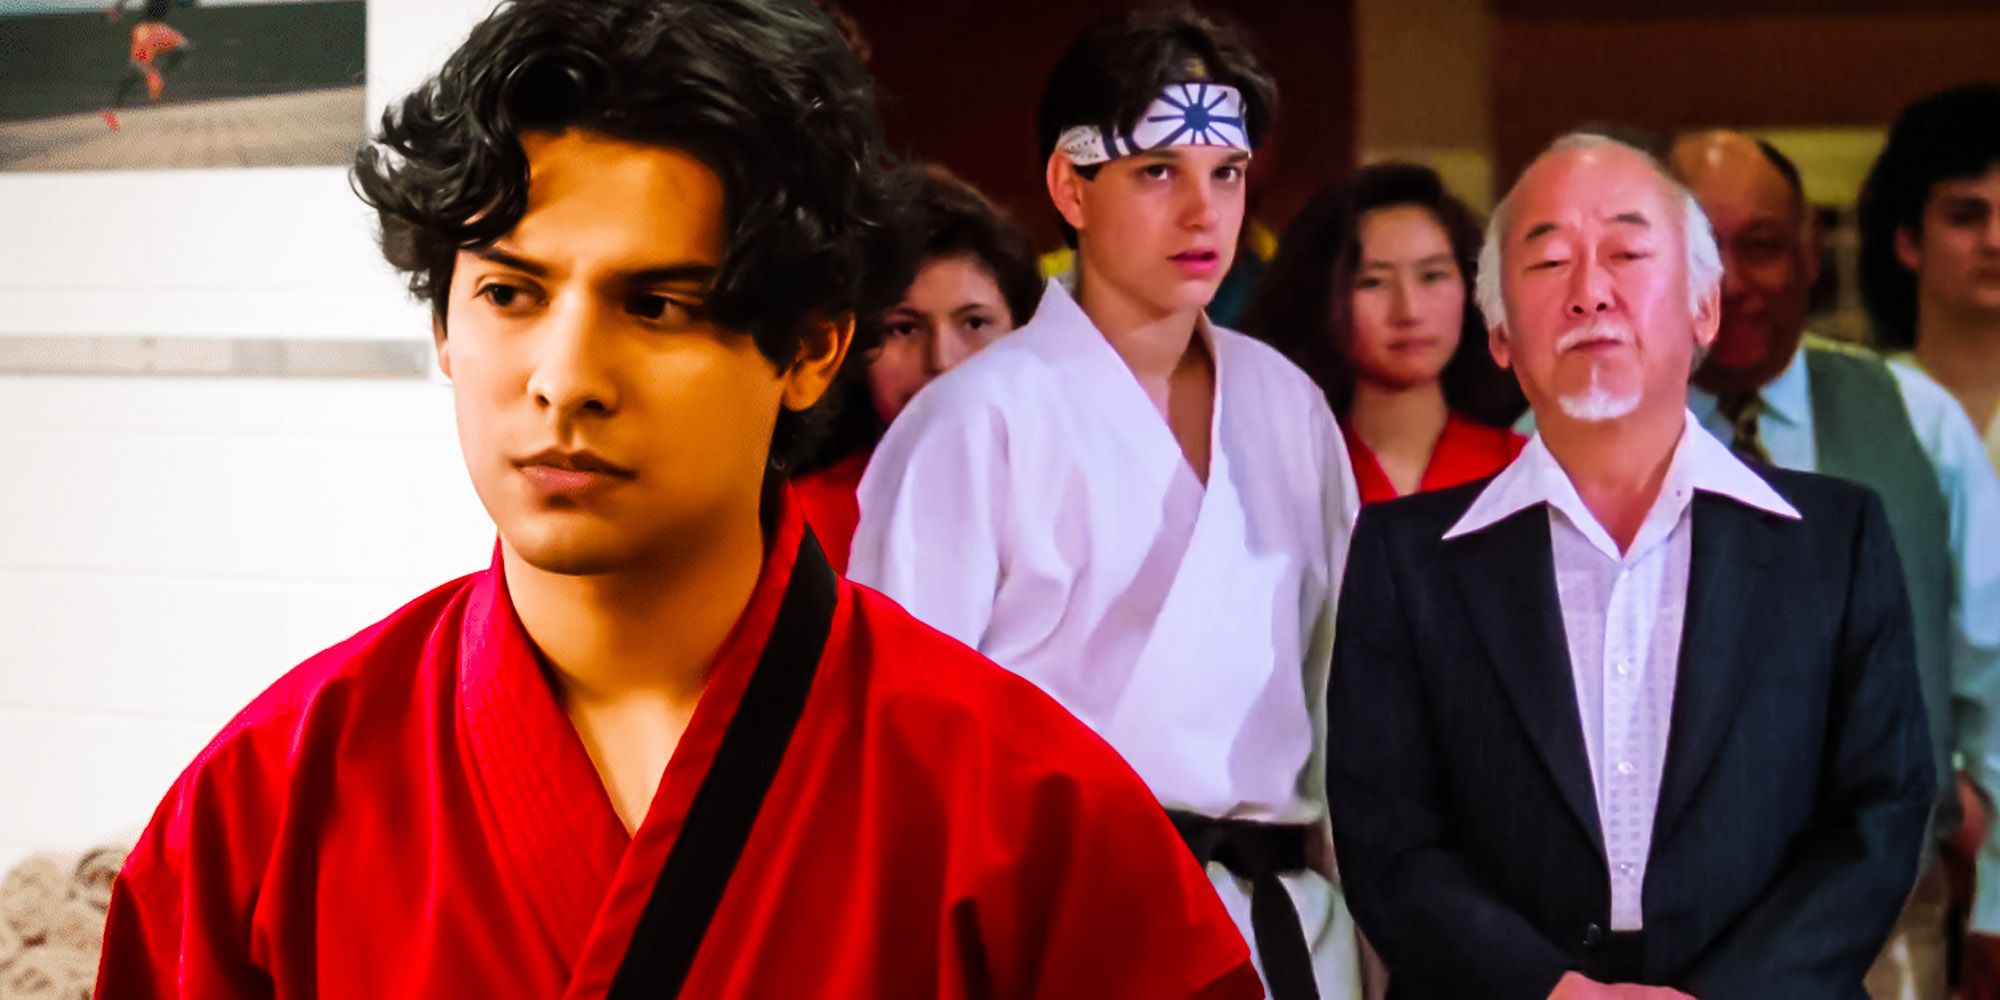 Cobra Kai Season 4’s All Valley Changes rectifica el error de Karate Kid 3